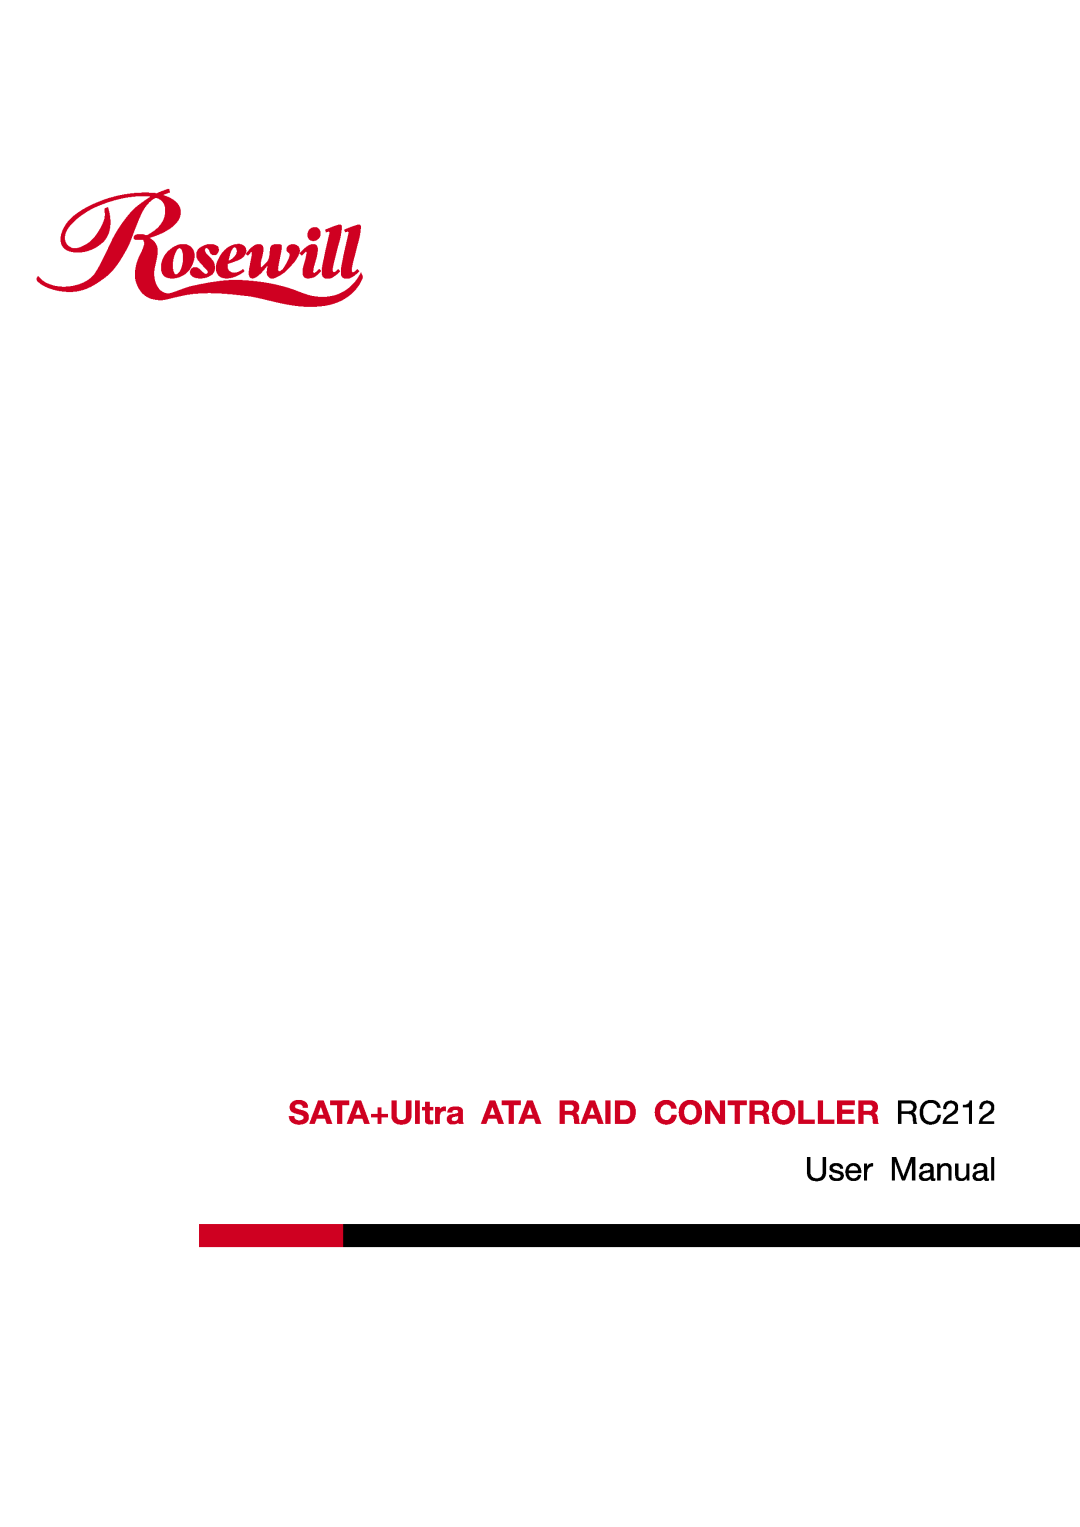 Rosewill user manual SATA+Ultra ATA RAID CONTROLLER RC212, User Manual 